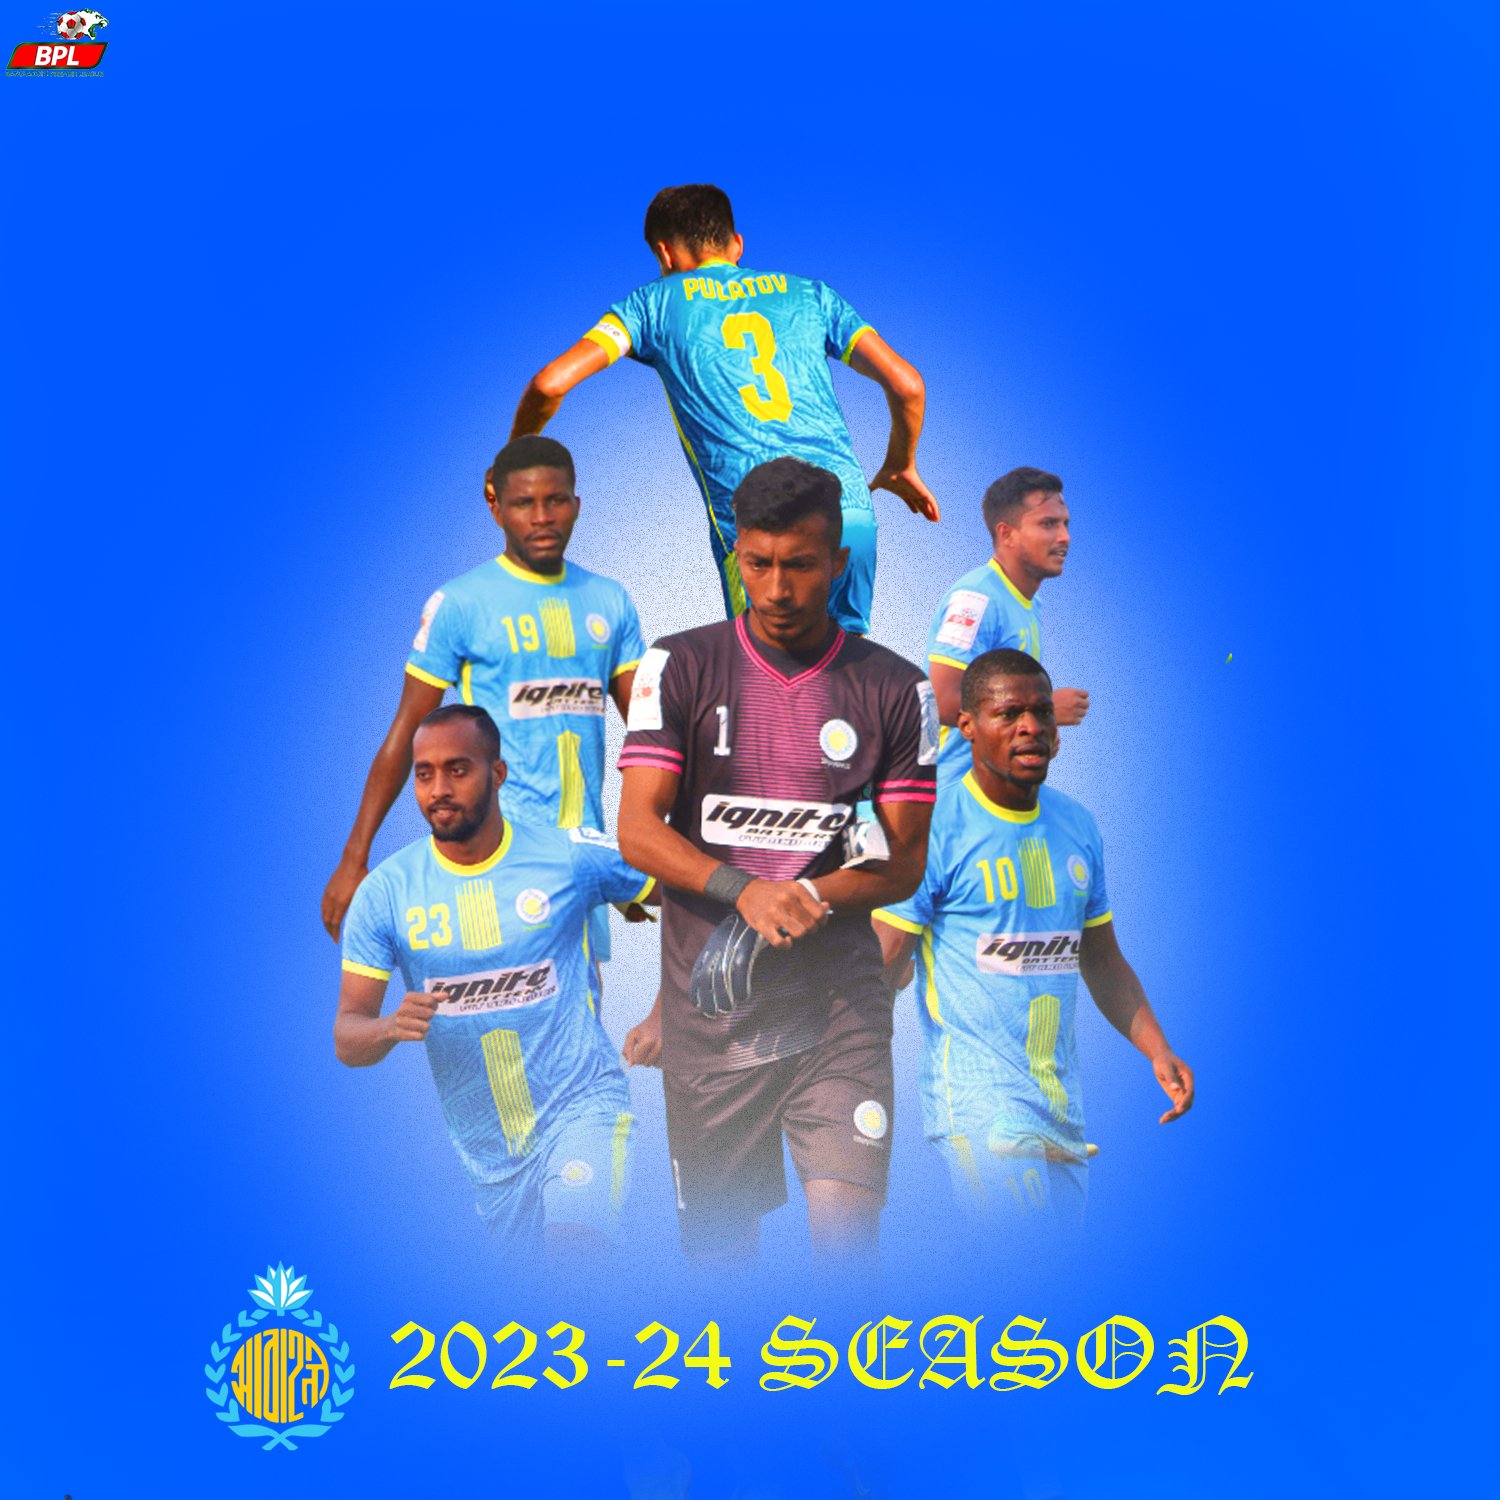 bpl jersey 2023 chittagong